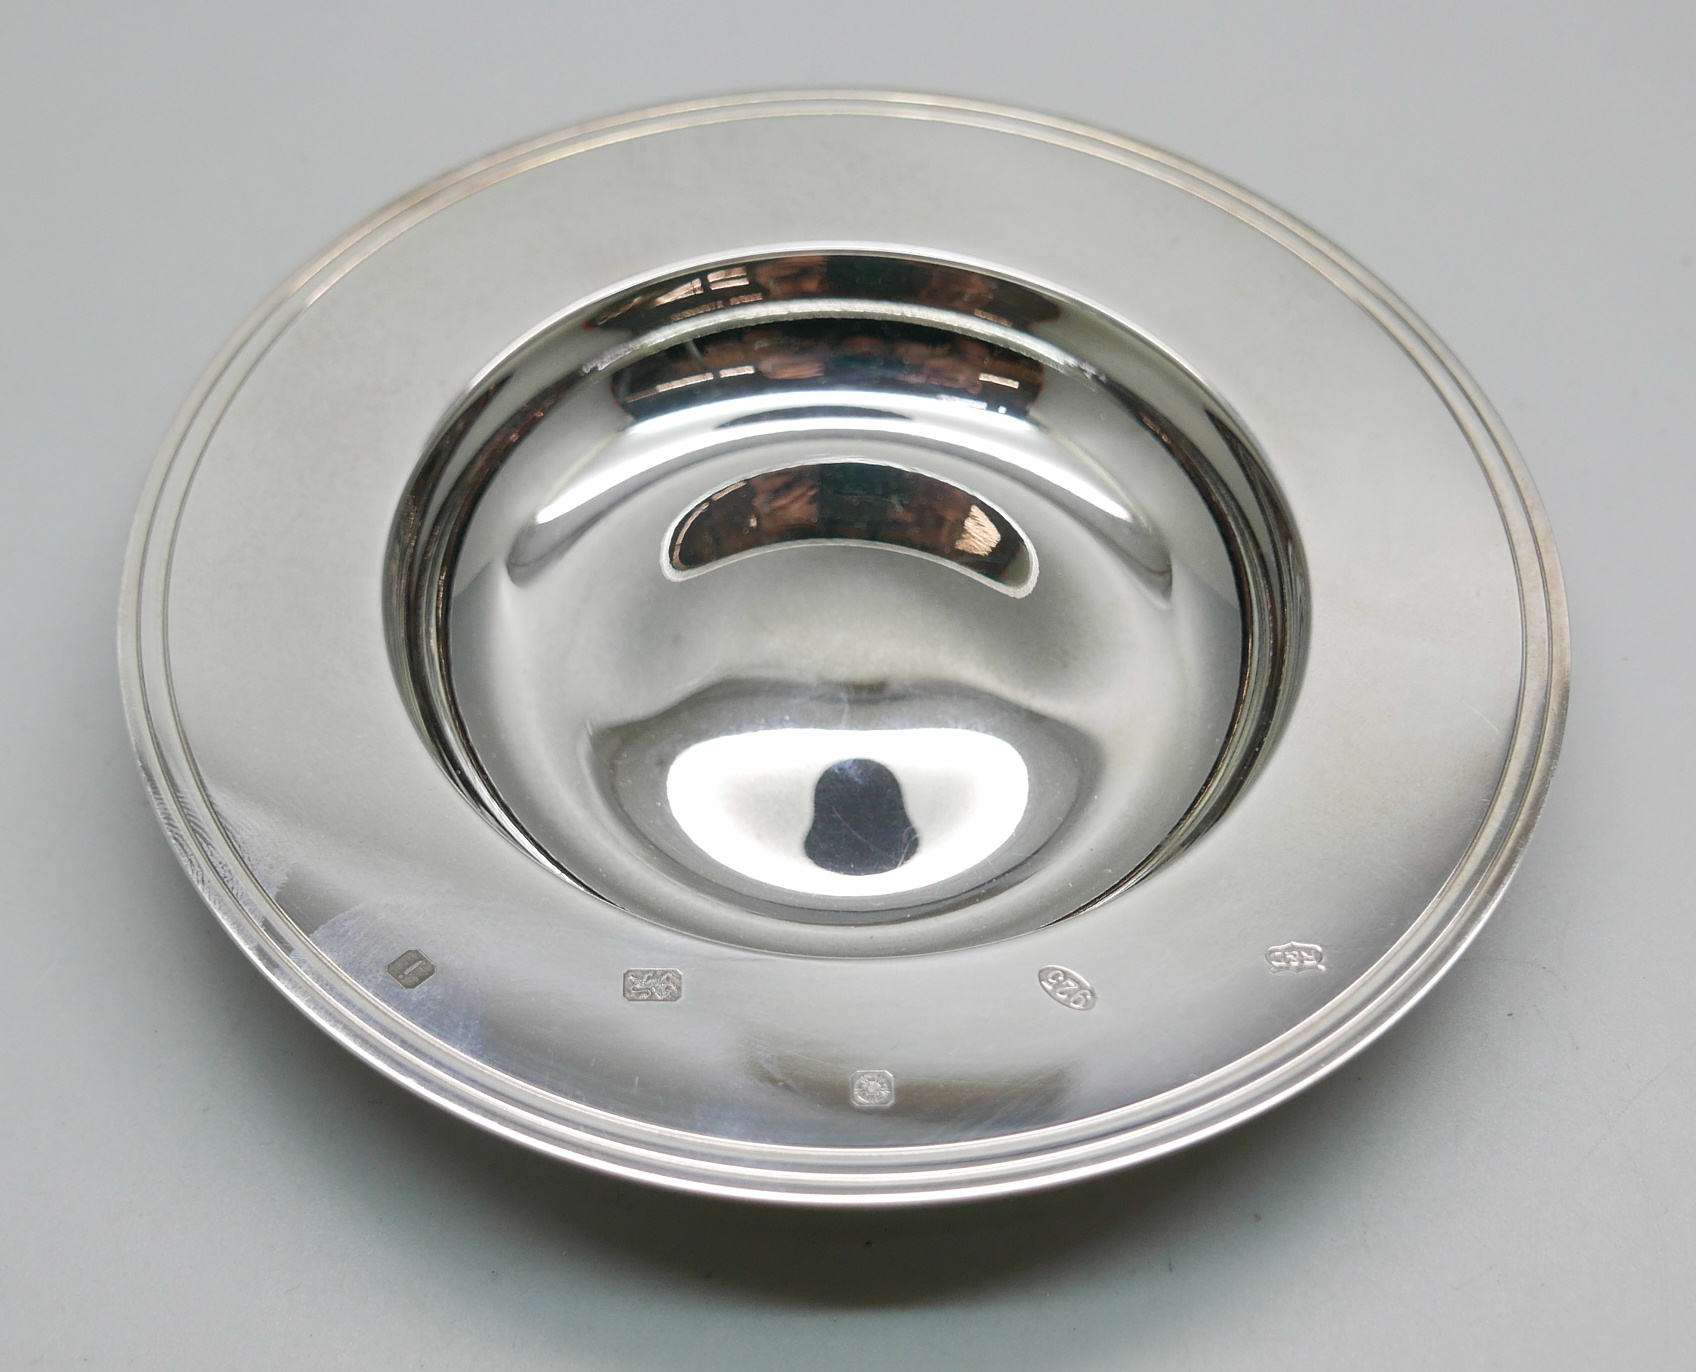 A silver dish, 119g